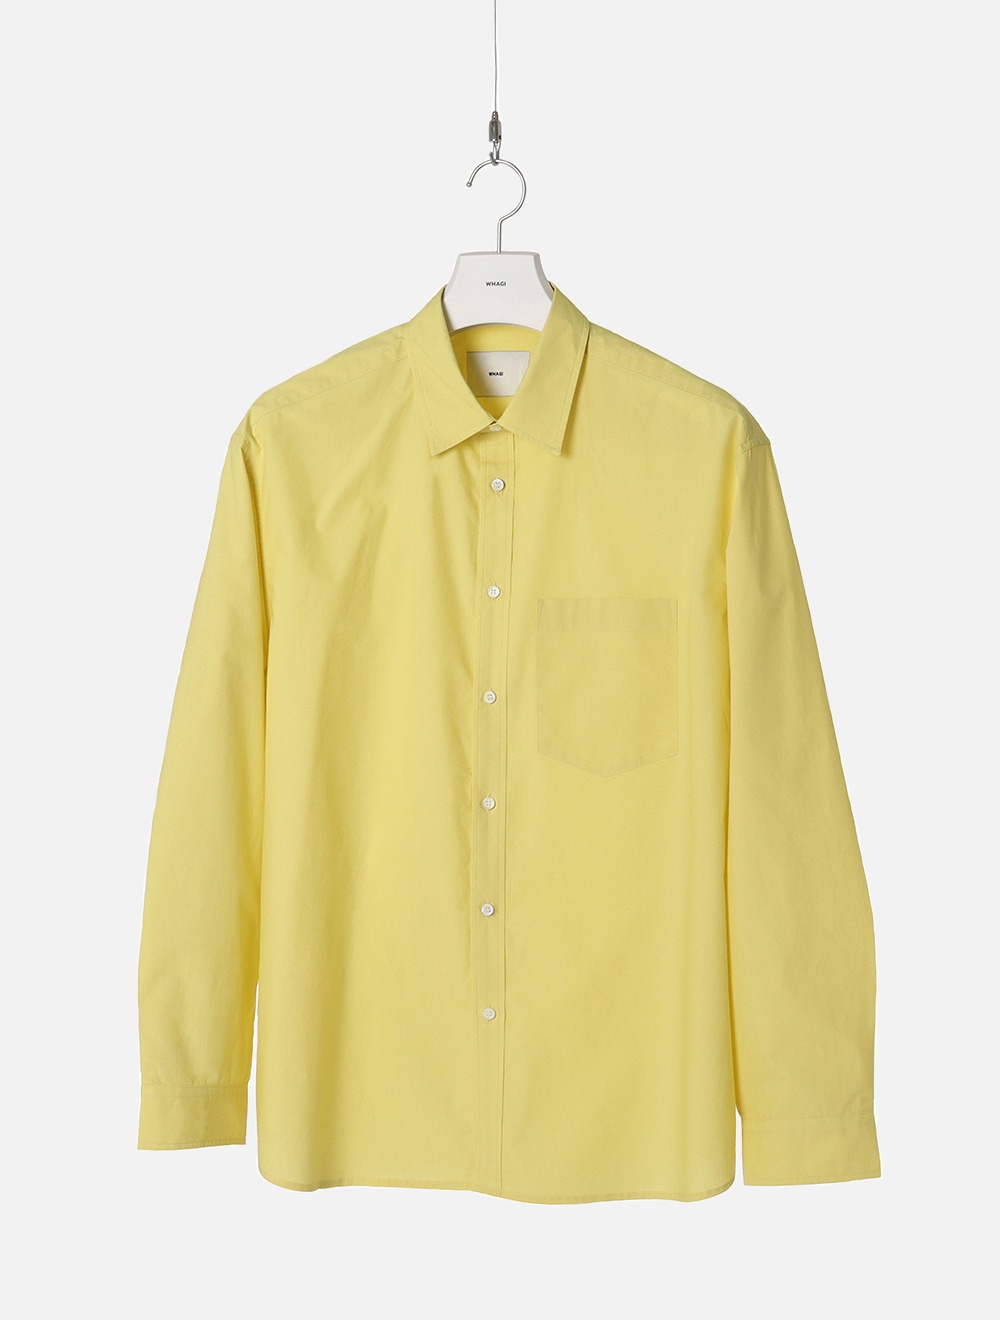 Architect Shirt (Lemon)